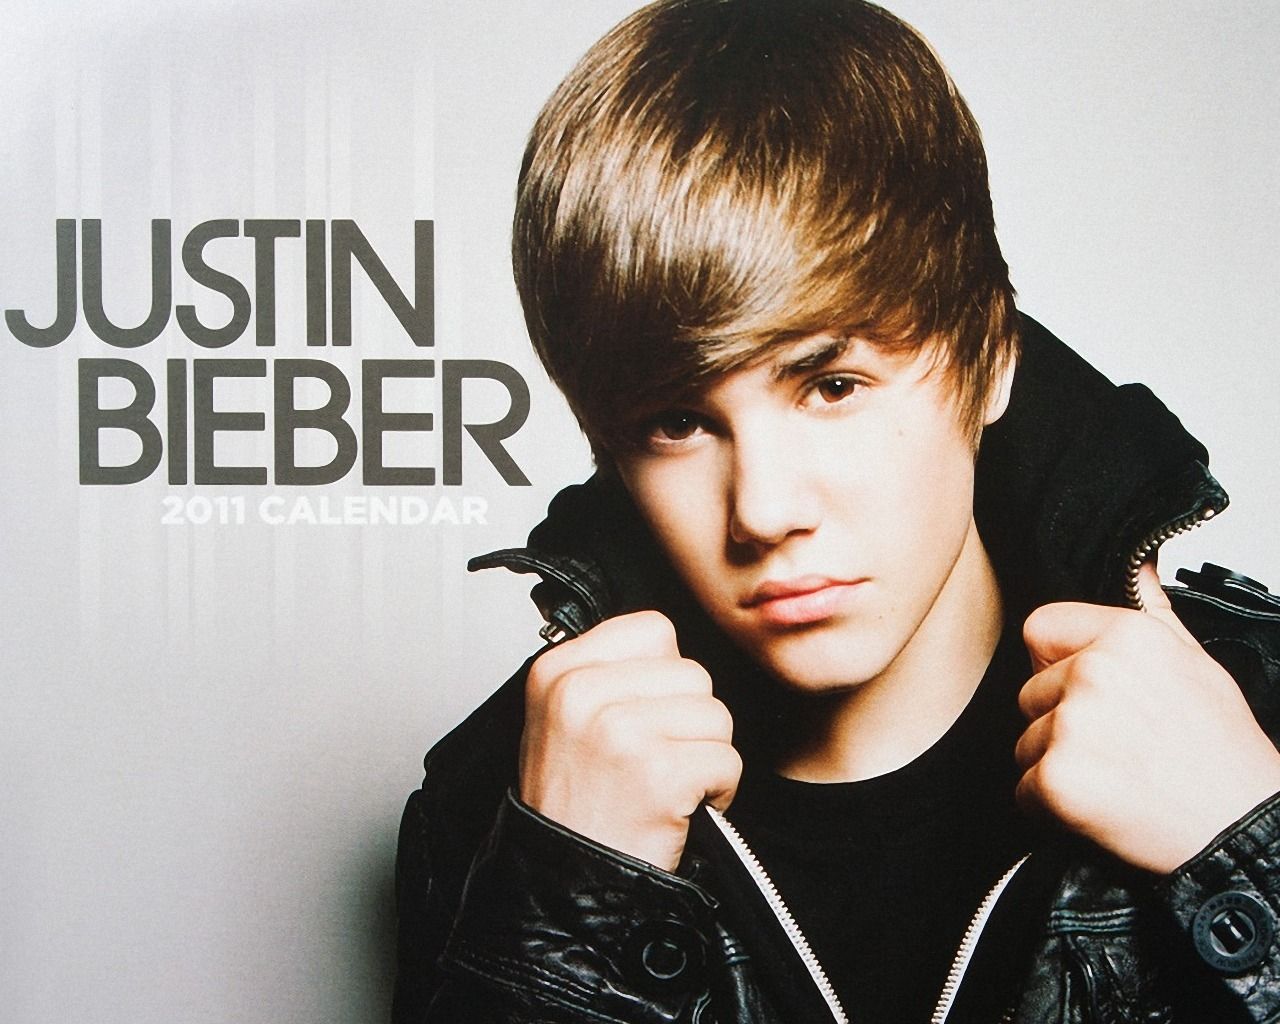 Justin Bieber HD Wallpaper 1280x1024 Wallpapers, 1280x1024 ...